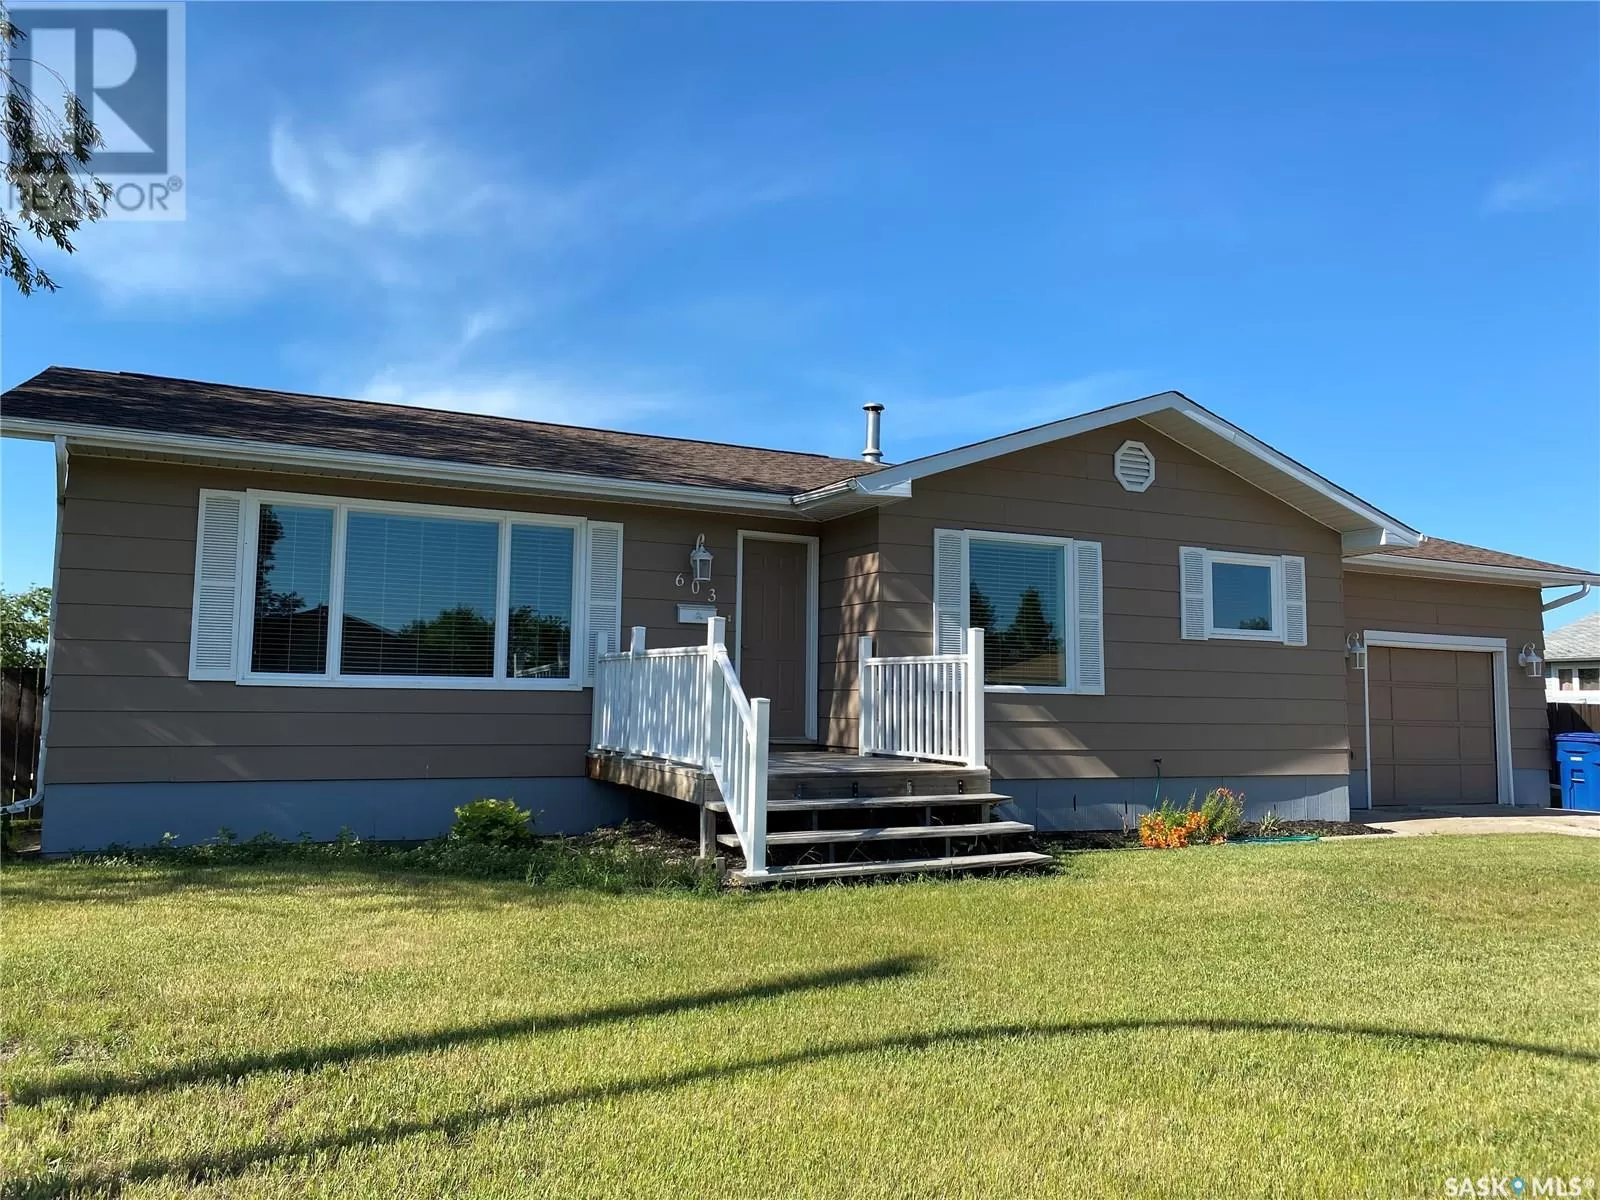 House for rent: 603 Stanley Street, Esterhazy, Saskatchewan S0A 0X0